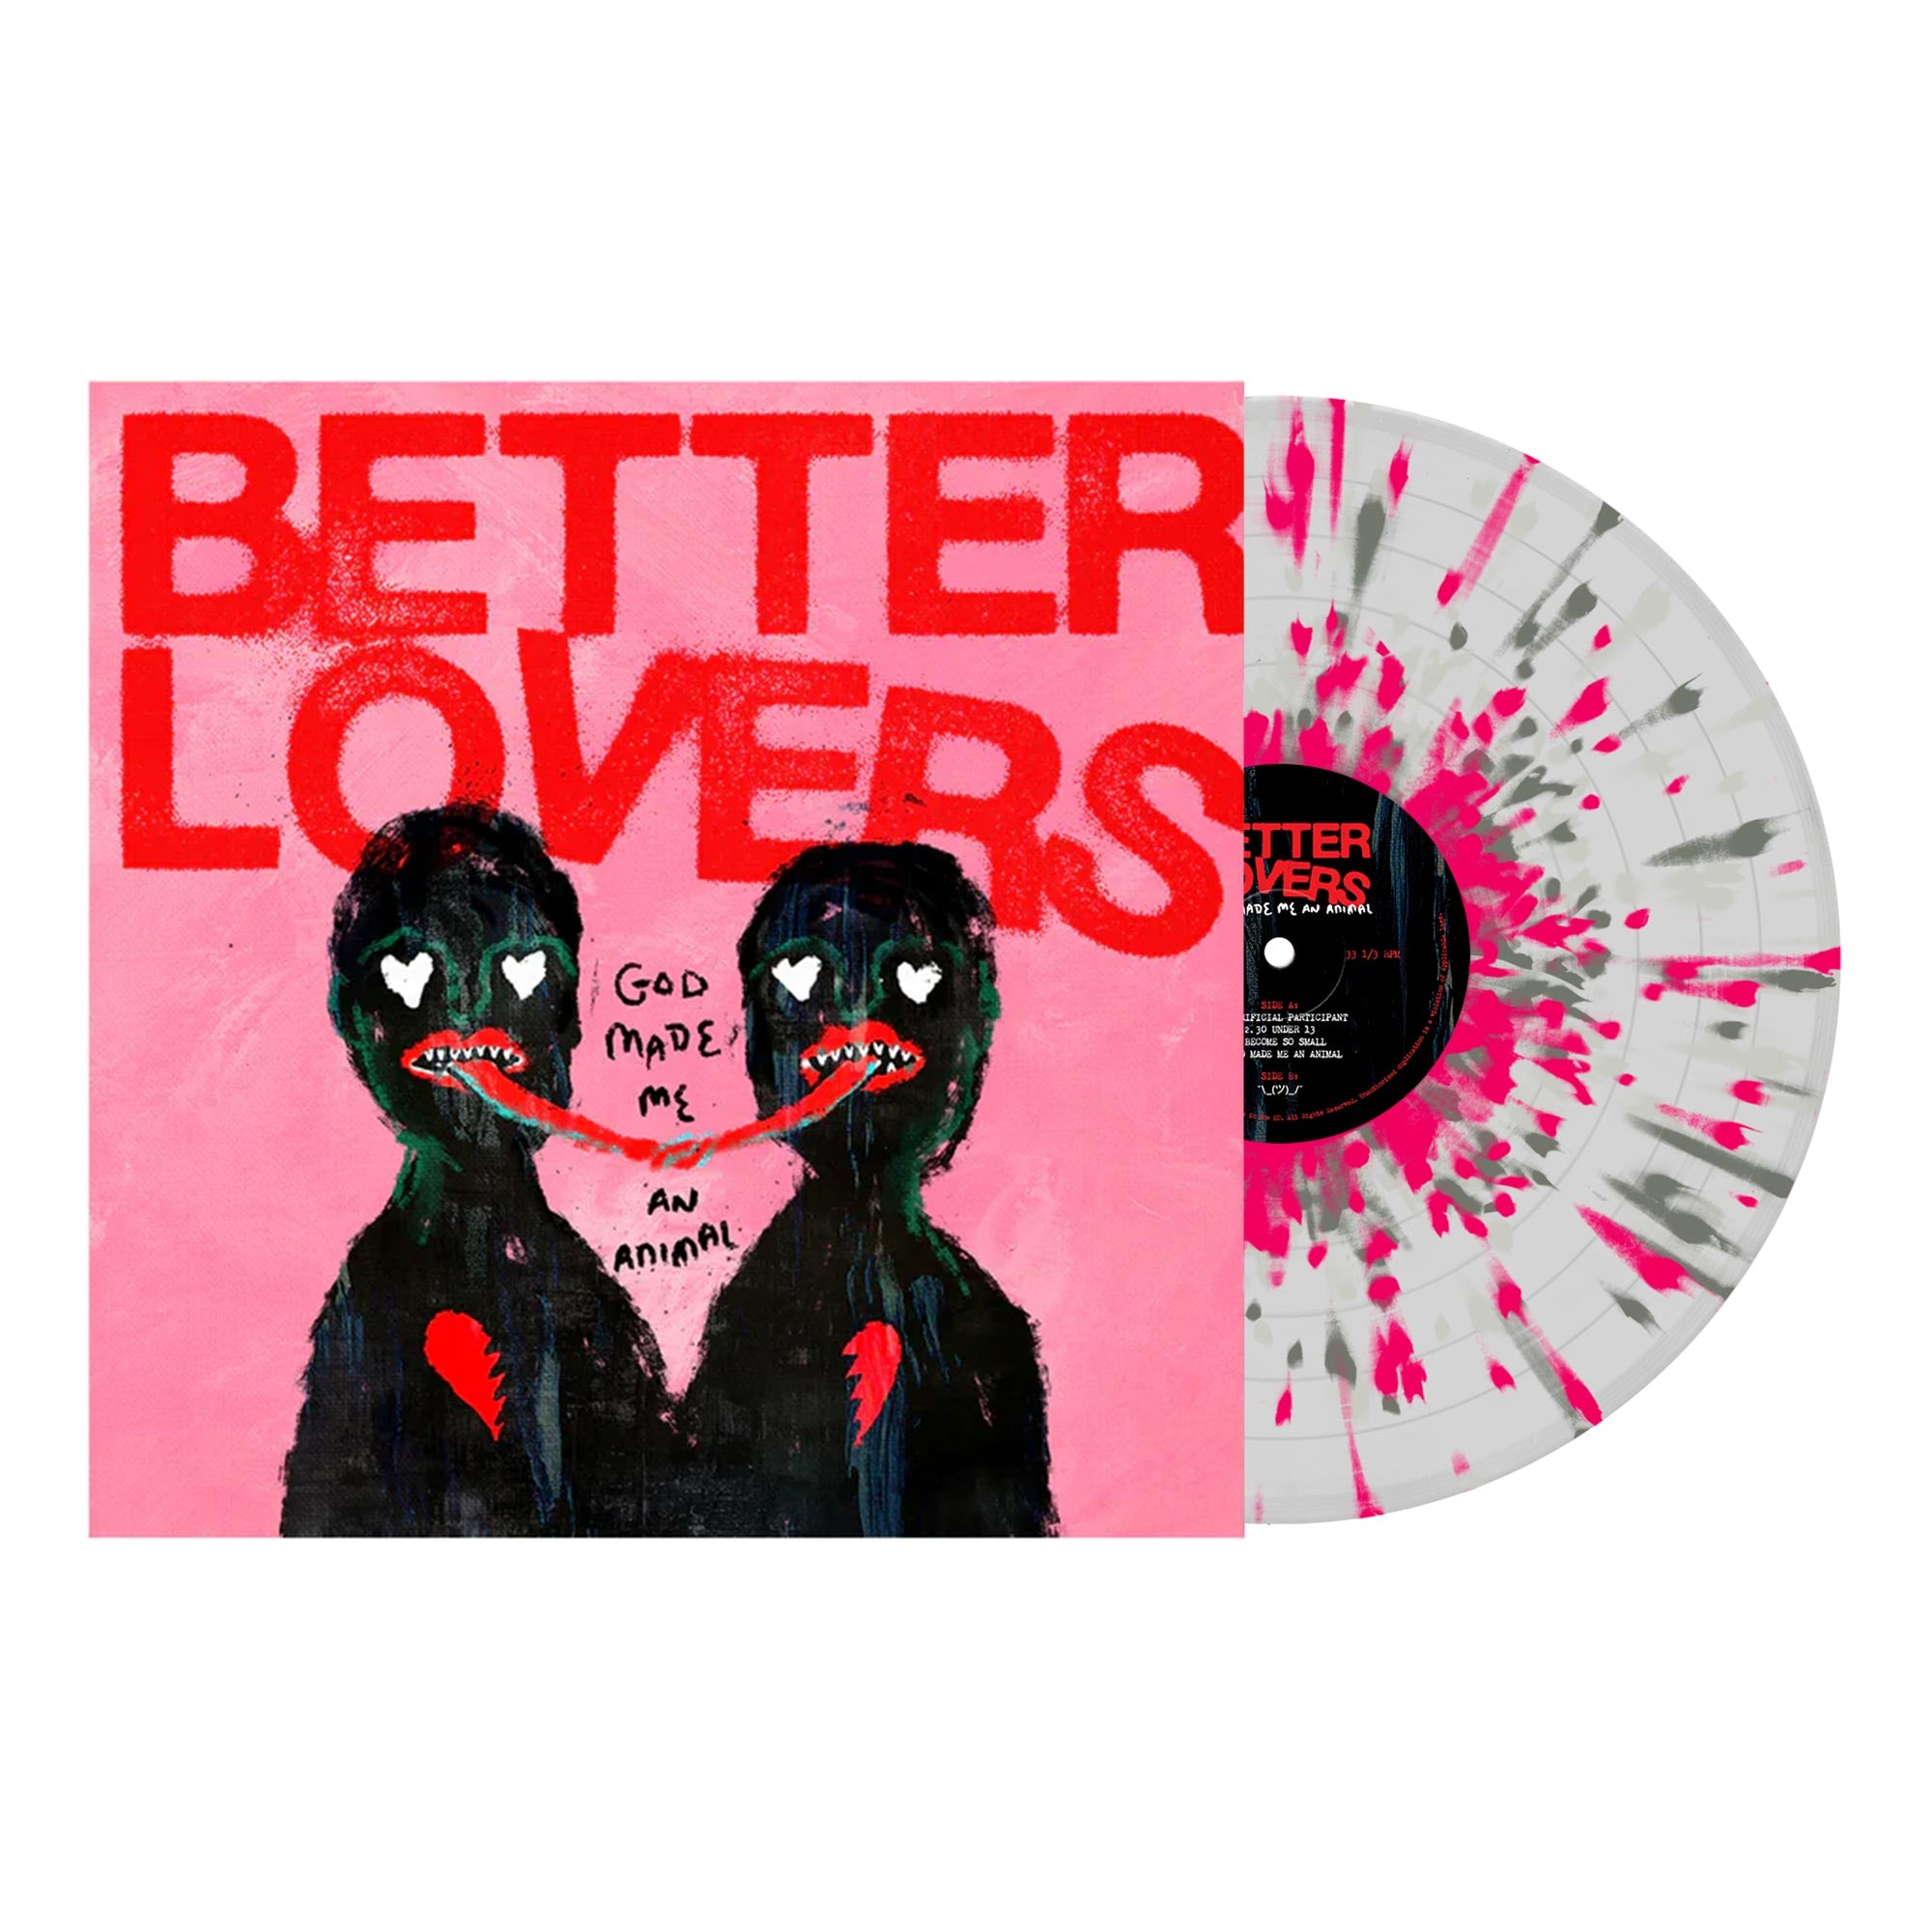 Better Lovers - 'God Made Me An Animal' Clear w/ Silver, Pink, White Splatter Vinyl